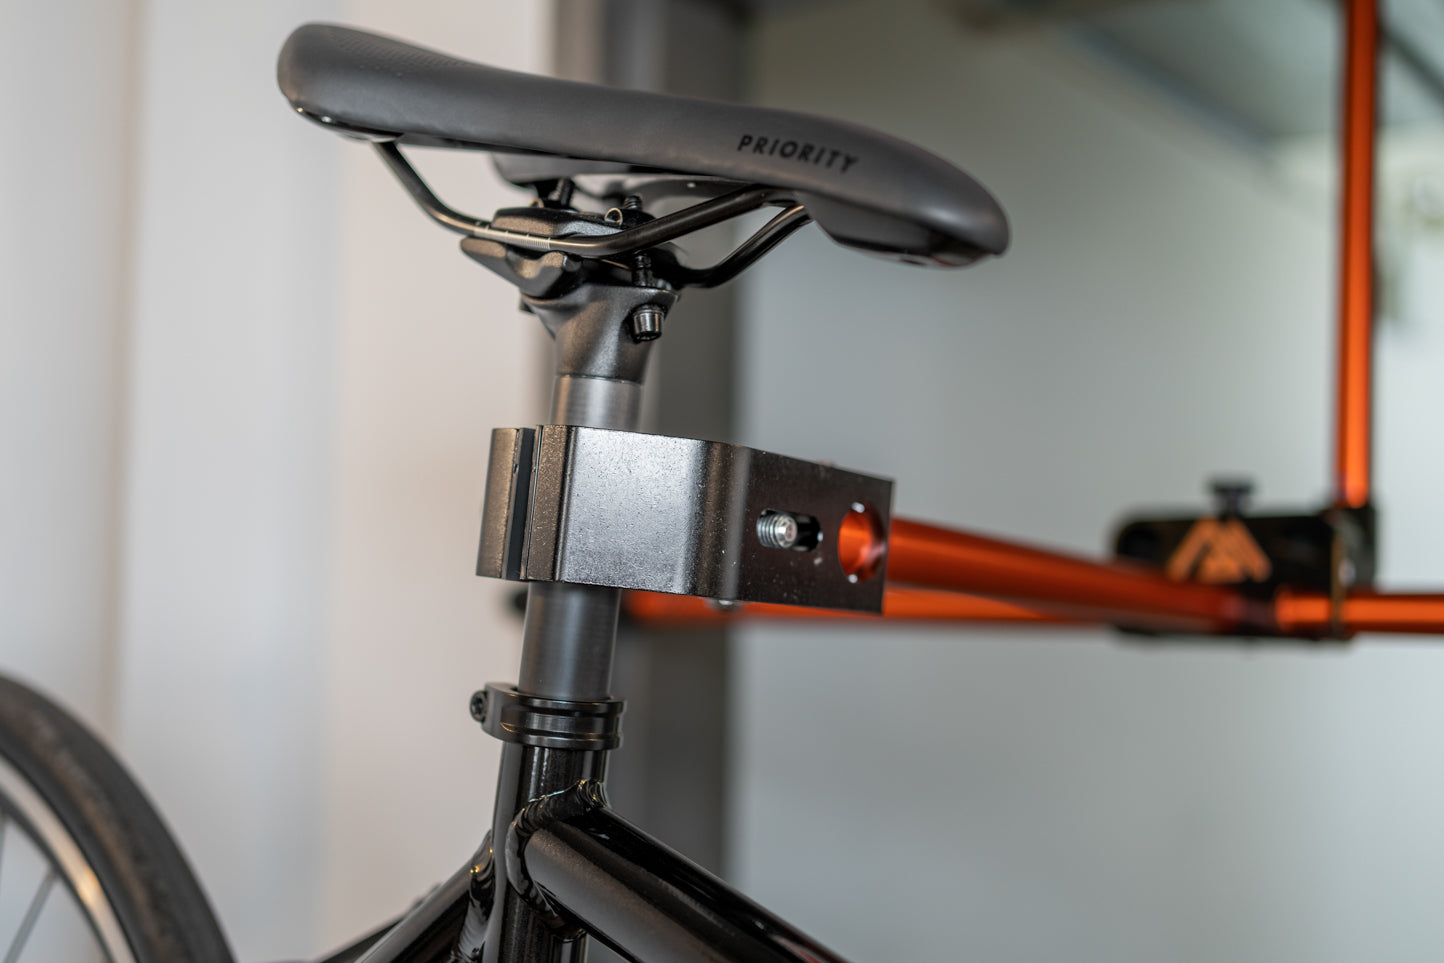 Orange and black bike rack for repairs and maintenance